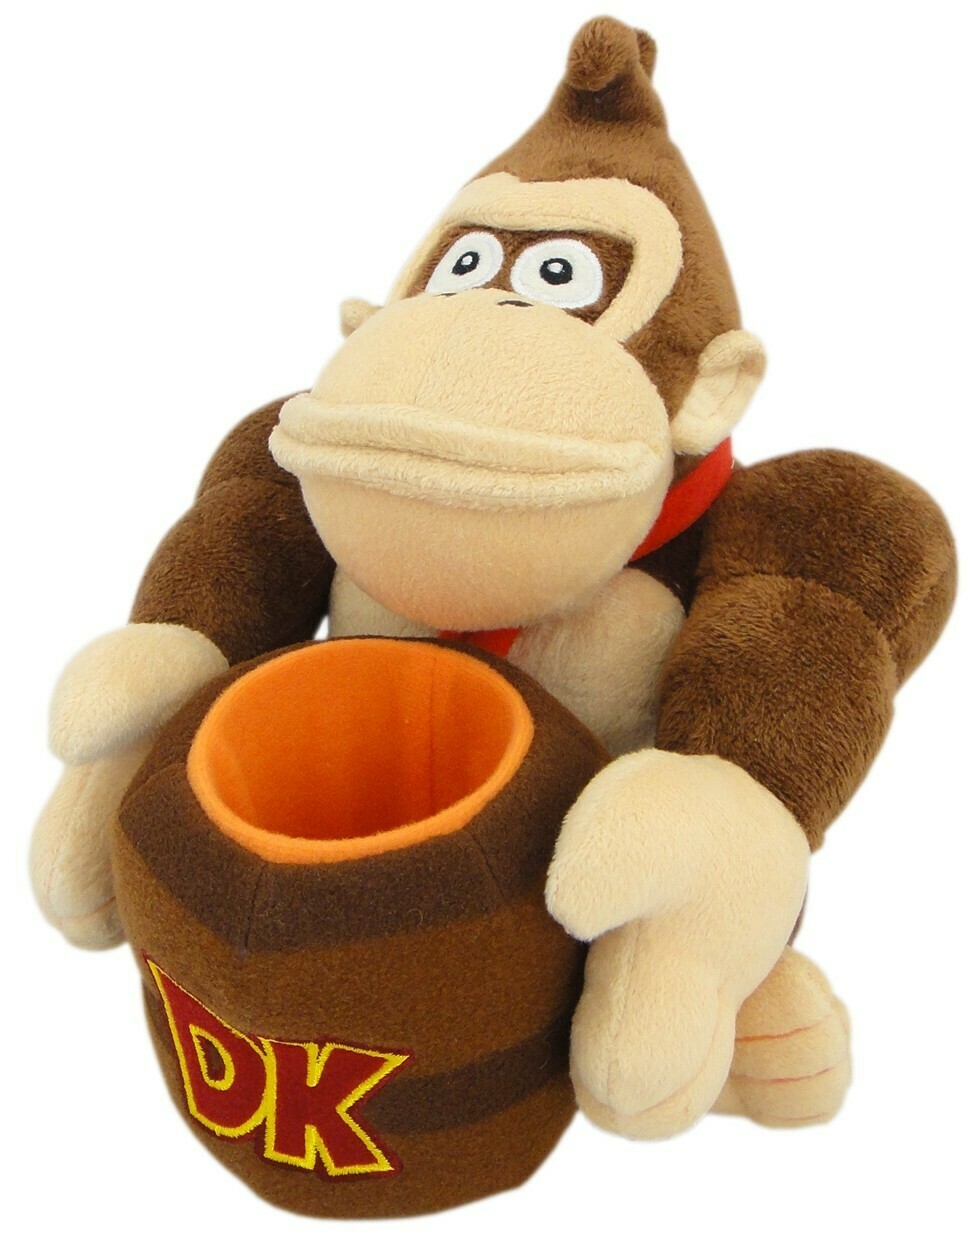 Little Buddy Super Mario Donkey Kong Holding Barrel 8" Plush